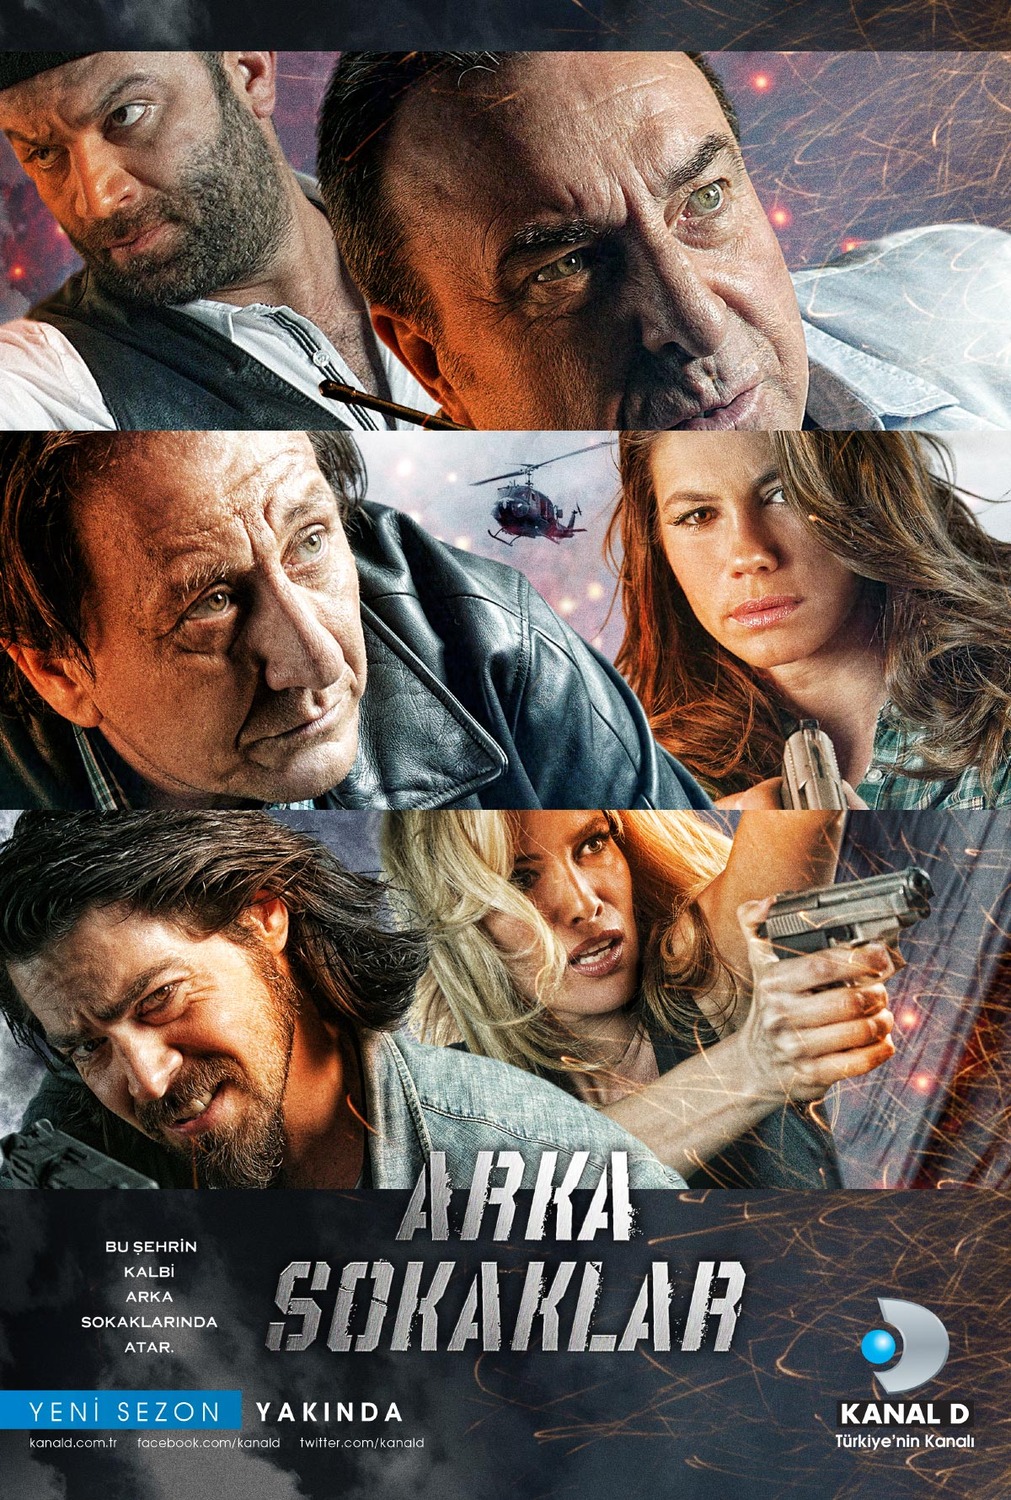 Extra Large TV Poster Image for Arka sokaklar (#3 of 11)